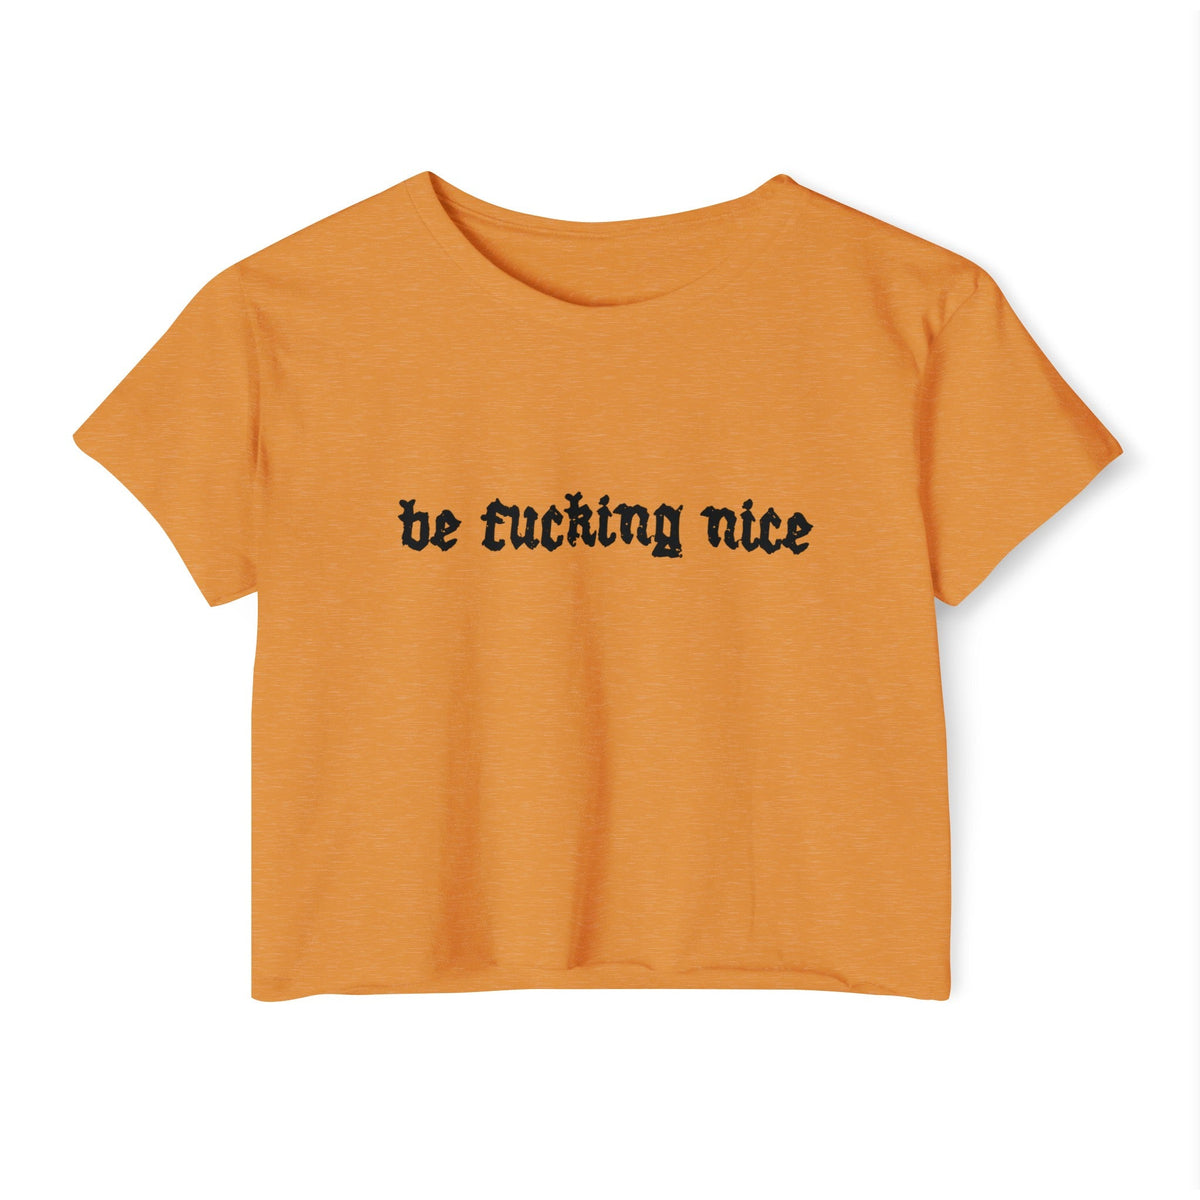 Be Fucking Nice Women's Lightweight Crop Top - Goth Cloth Co.T - Shirt19124835869099603929